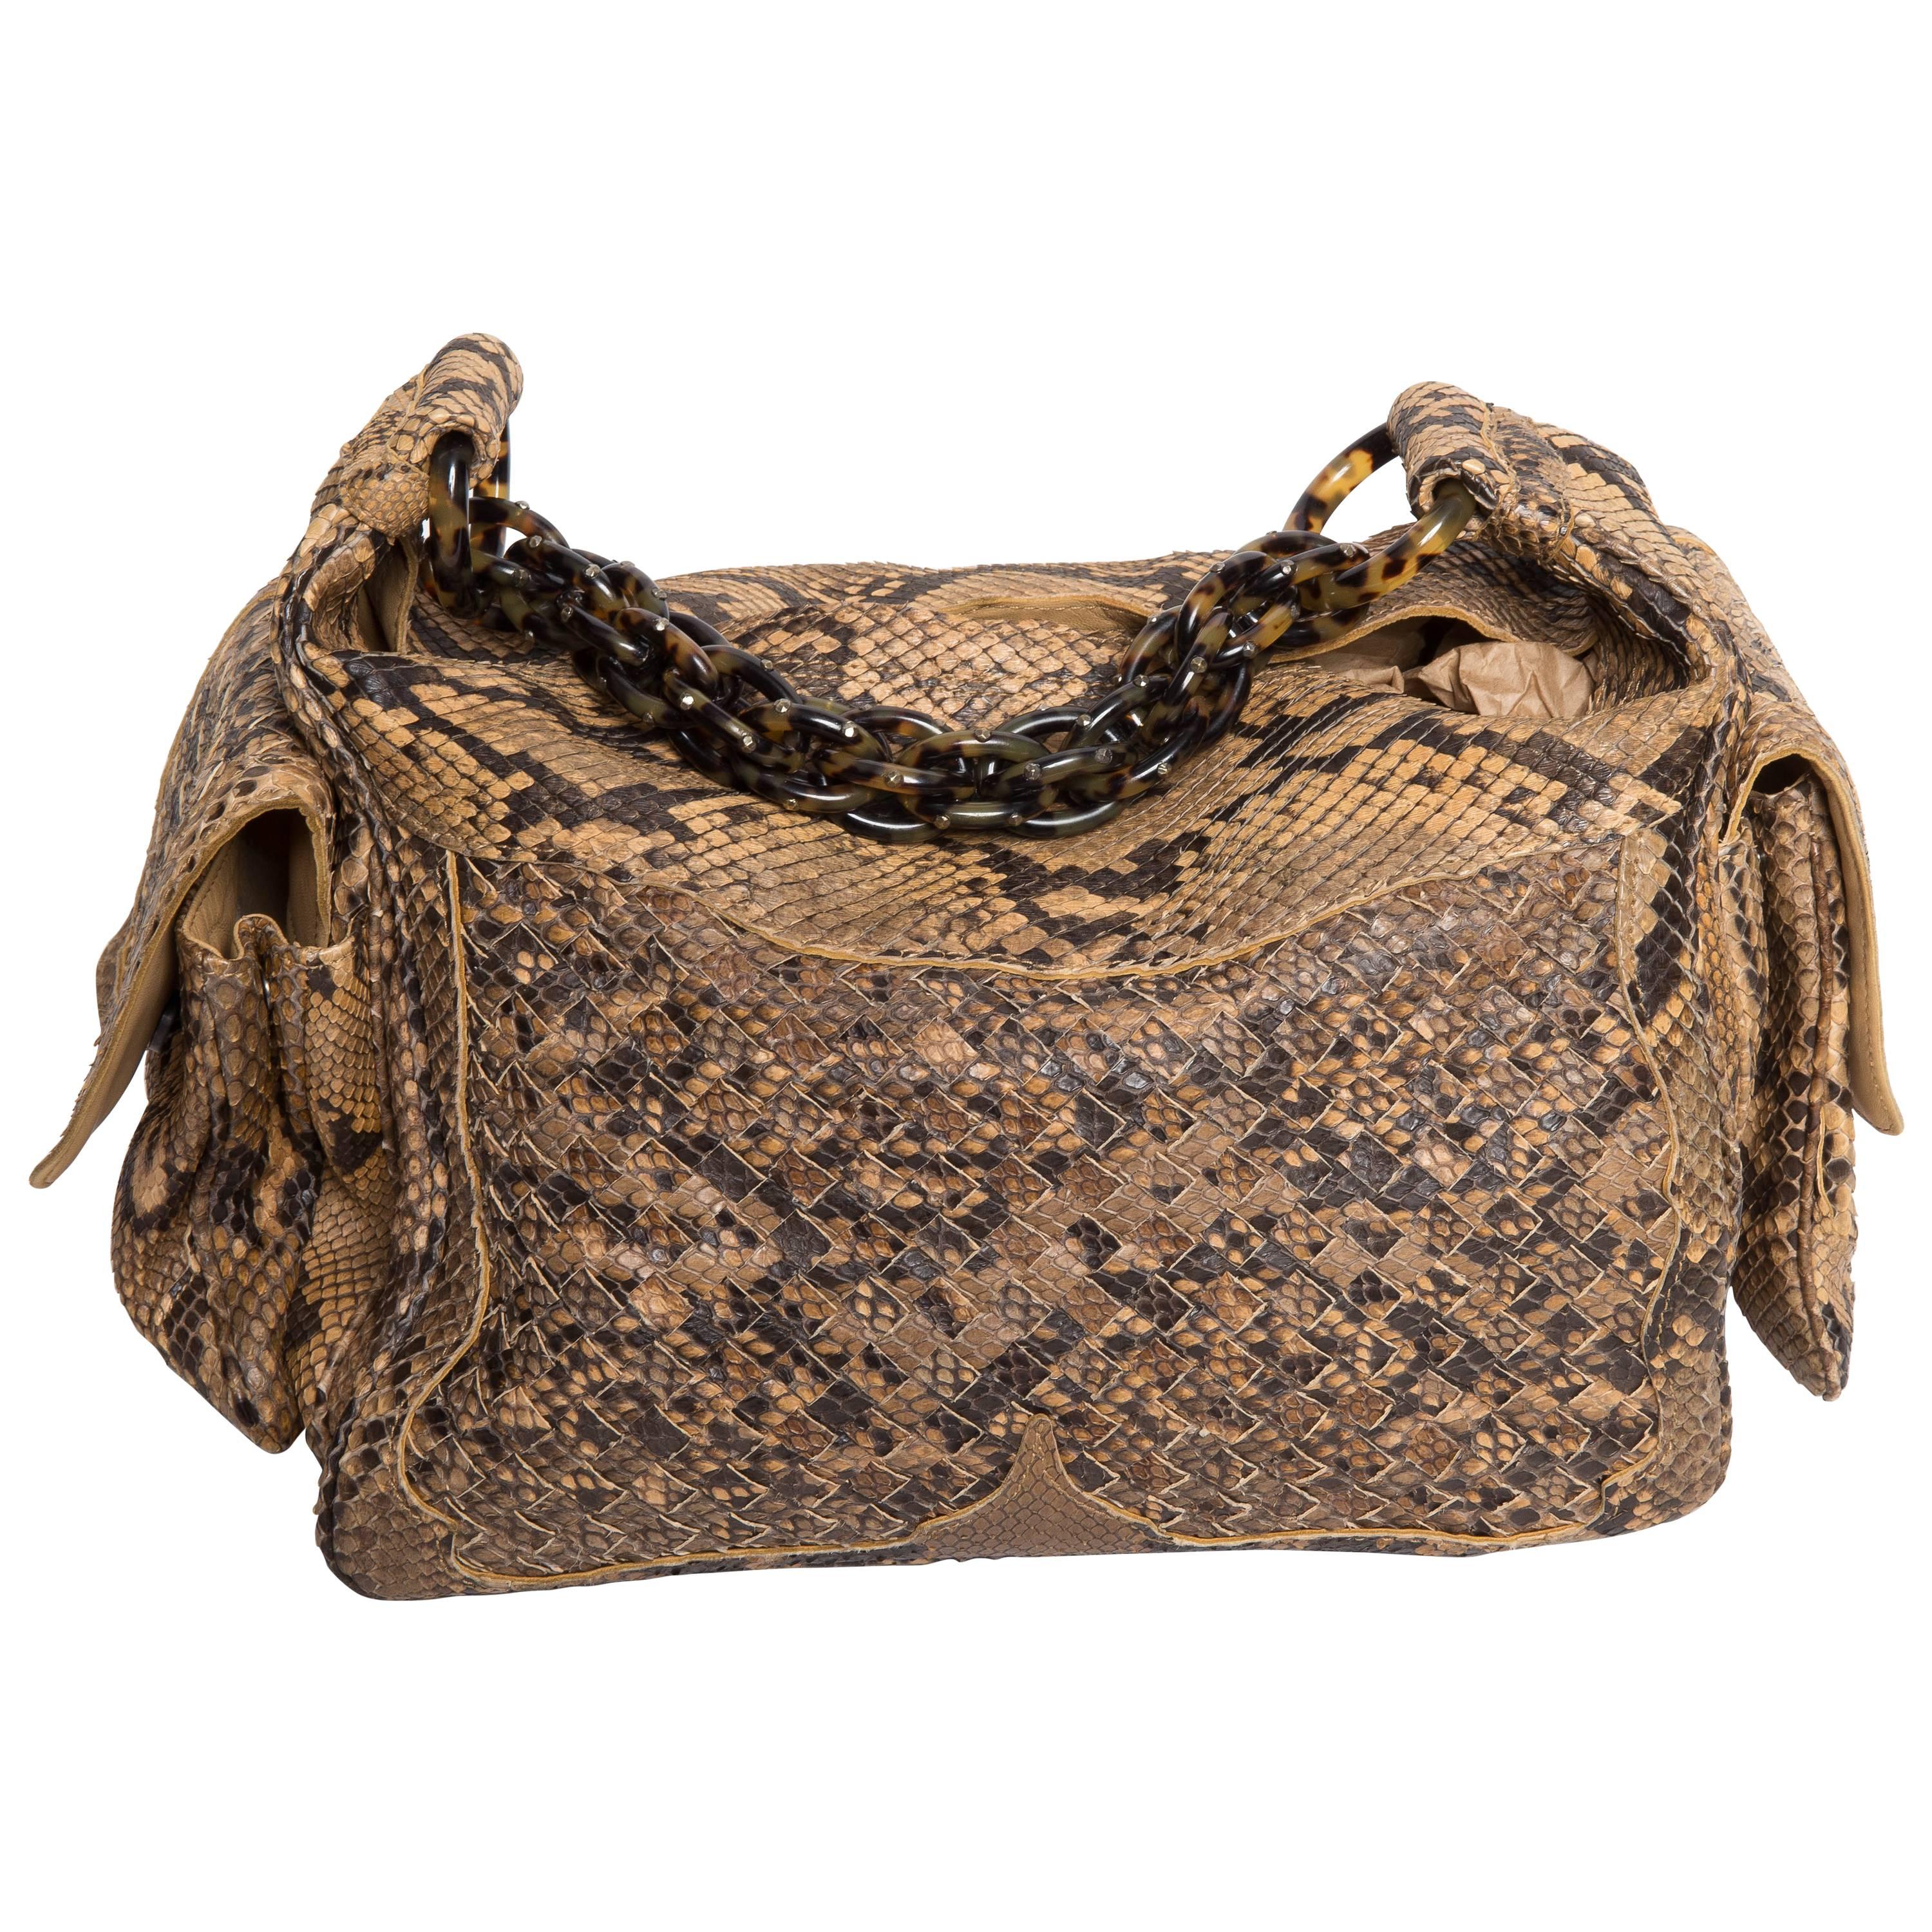 Bottega Veneta Limited Edition Python Shoulder Bag with Tortoise Shell Chain